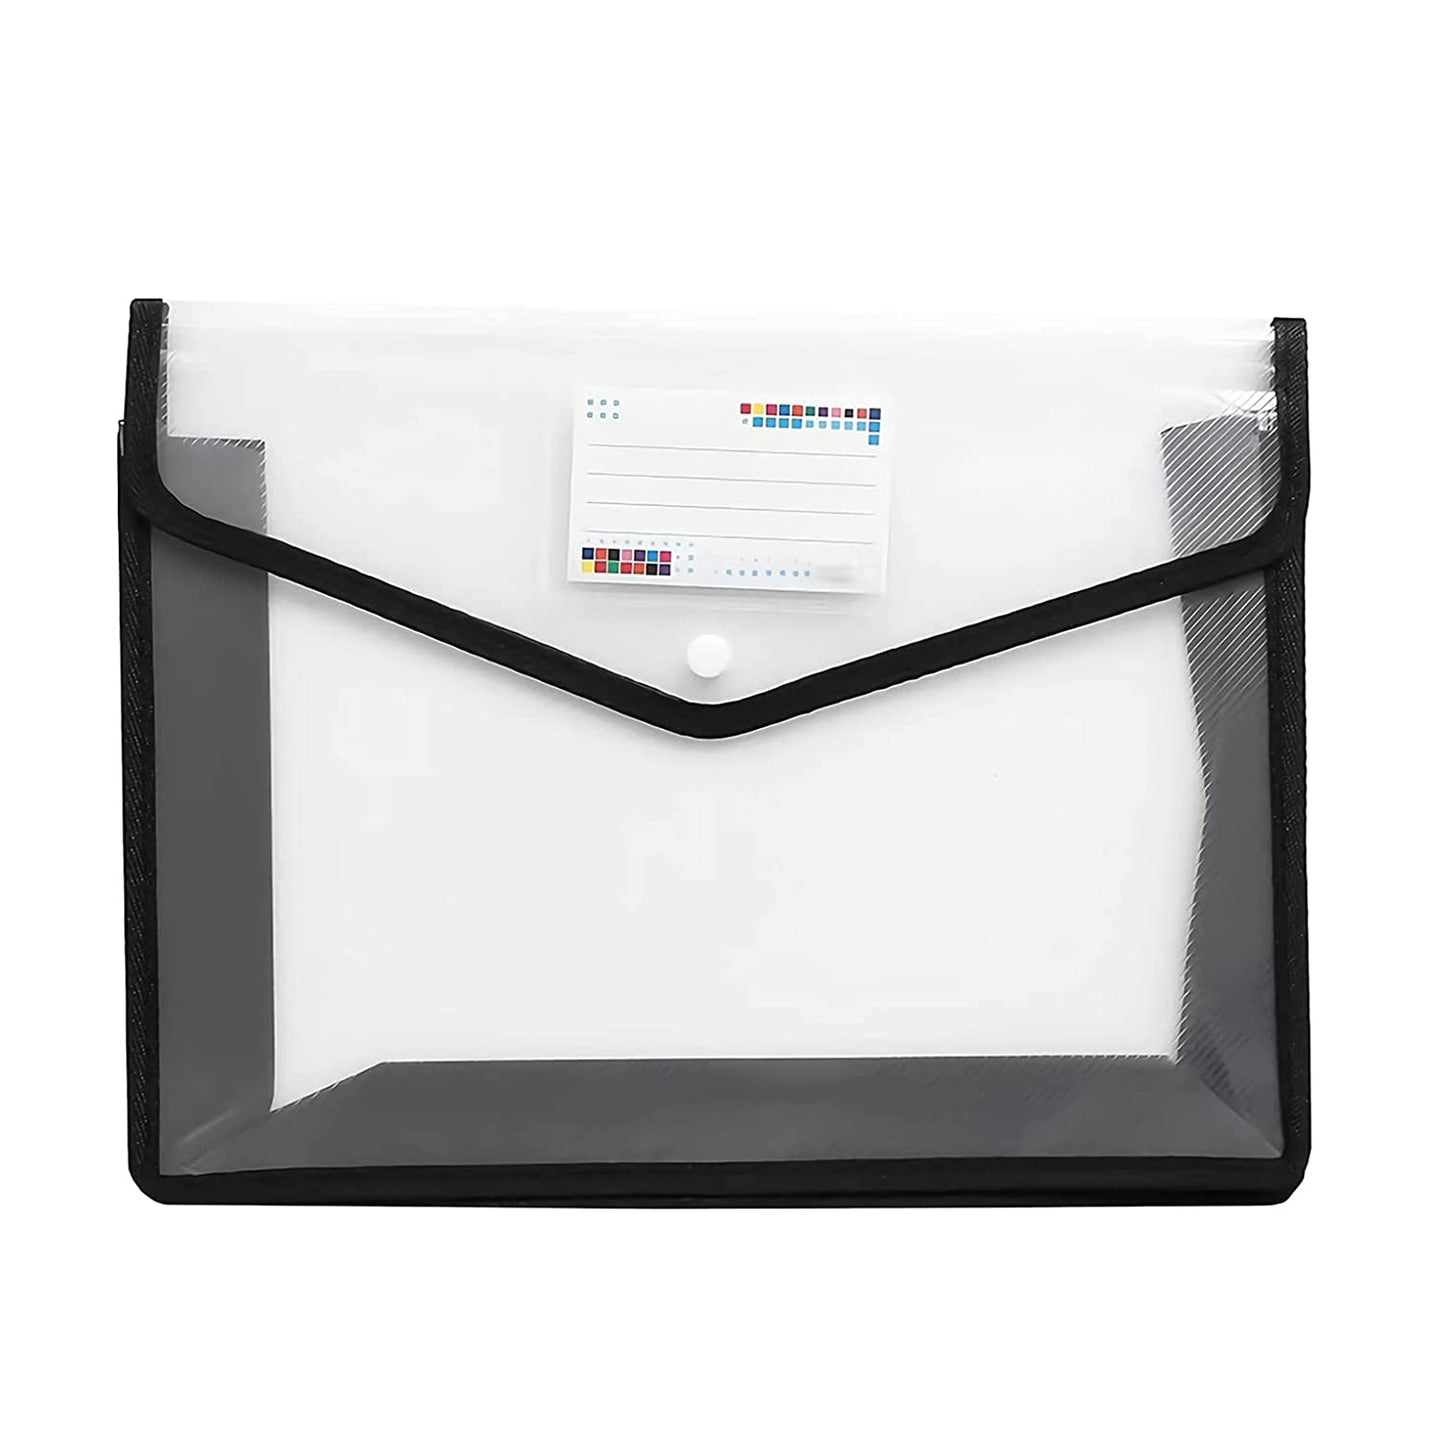 YoeeJob Plastic File Folders Legal Size Expandable Document Folder with Snap Button Closure, Black